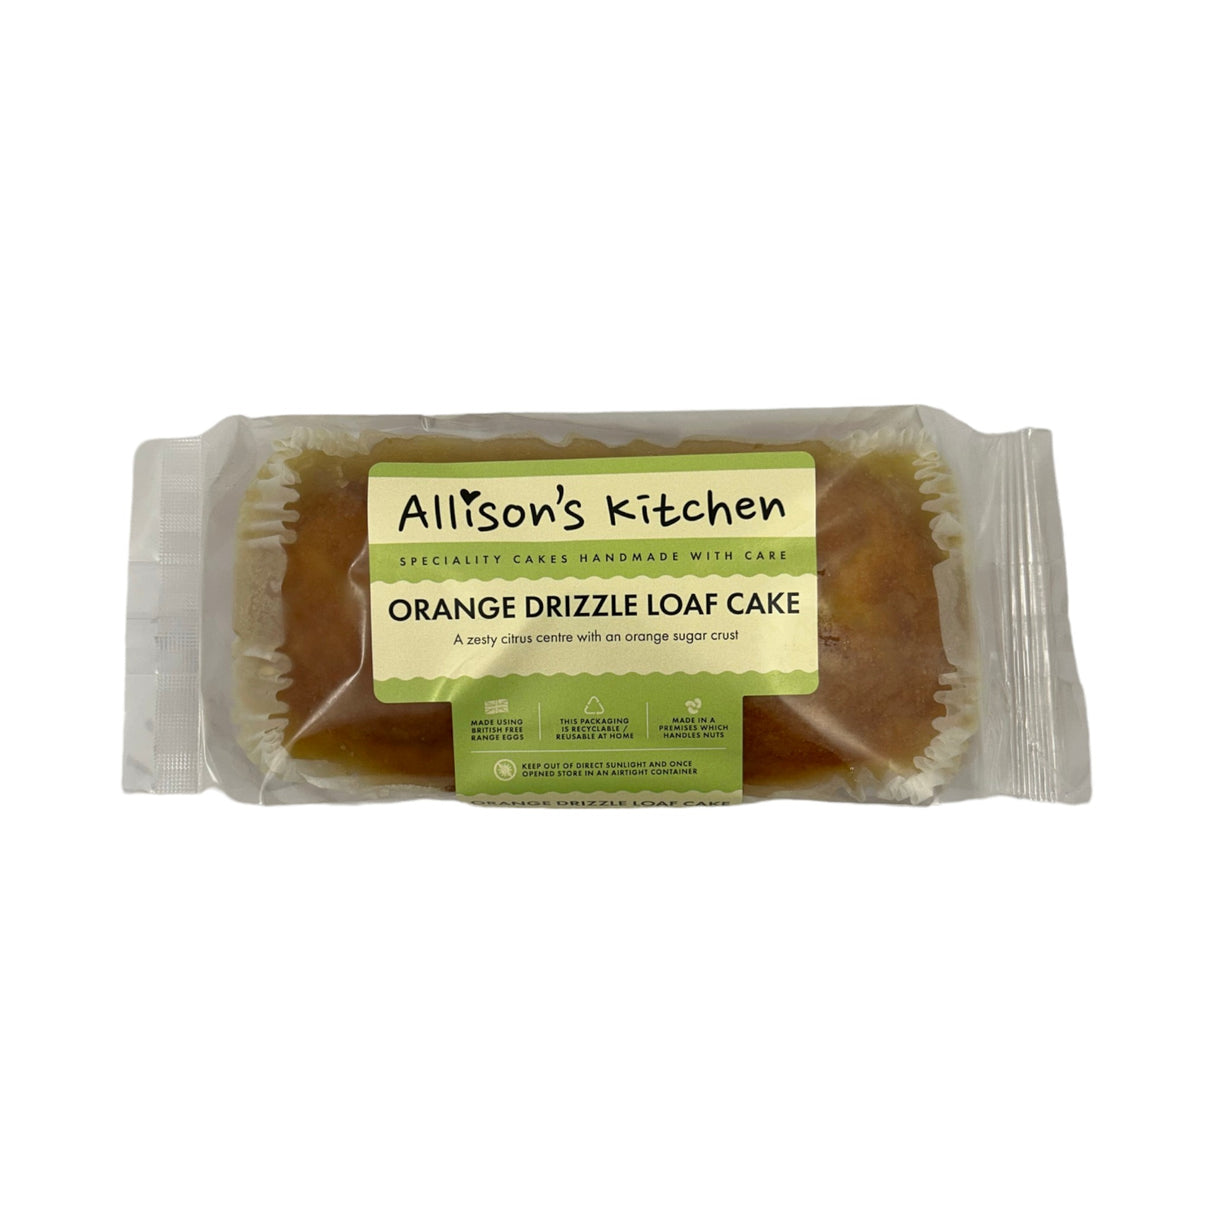 Allison's Kitchen Orange Drizzle Loaf Cake